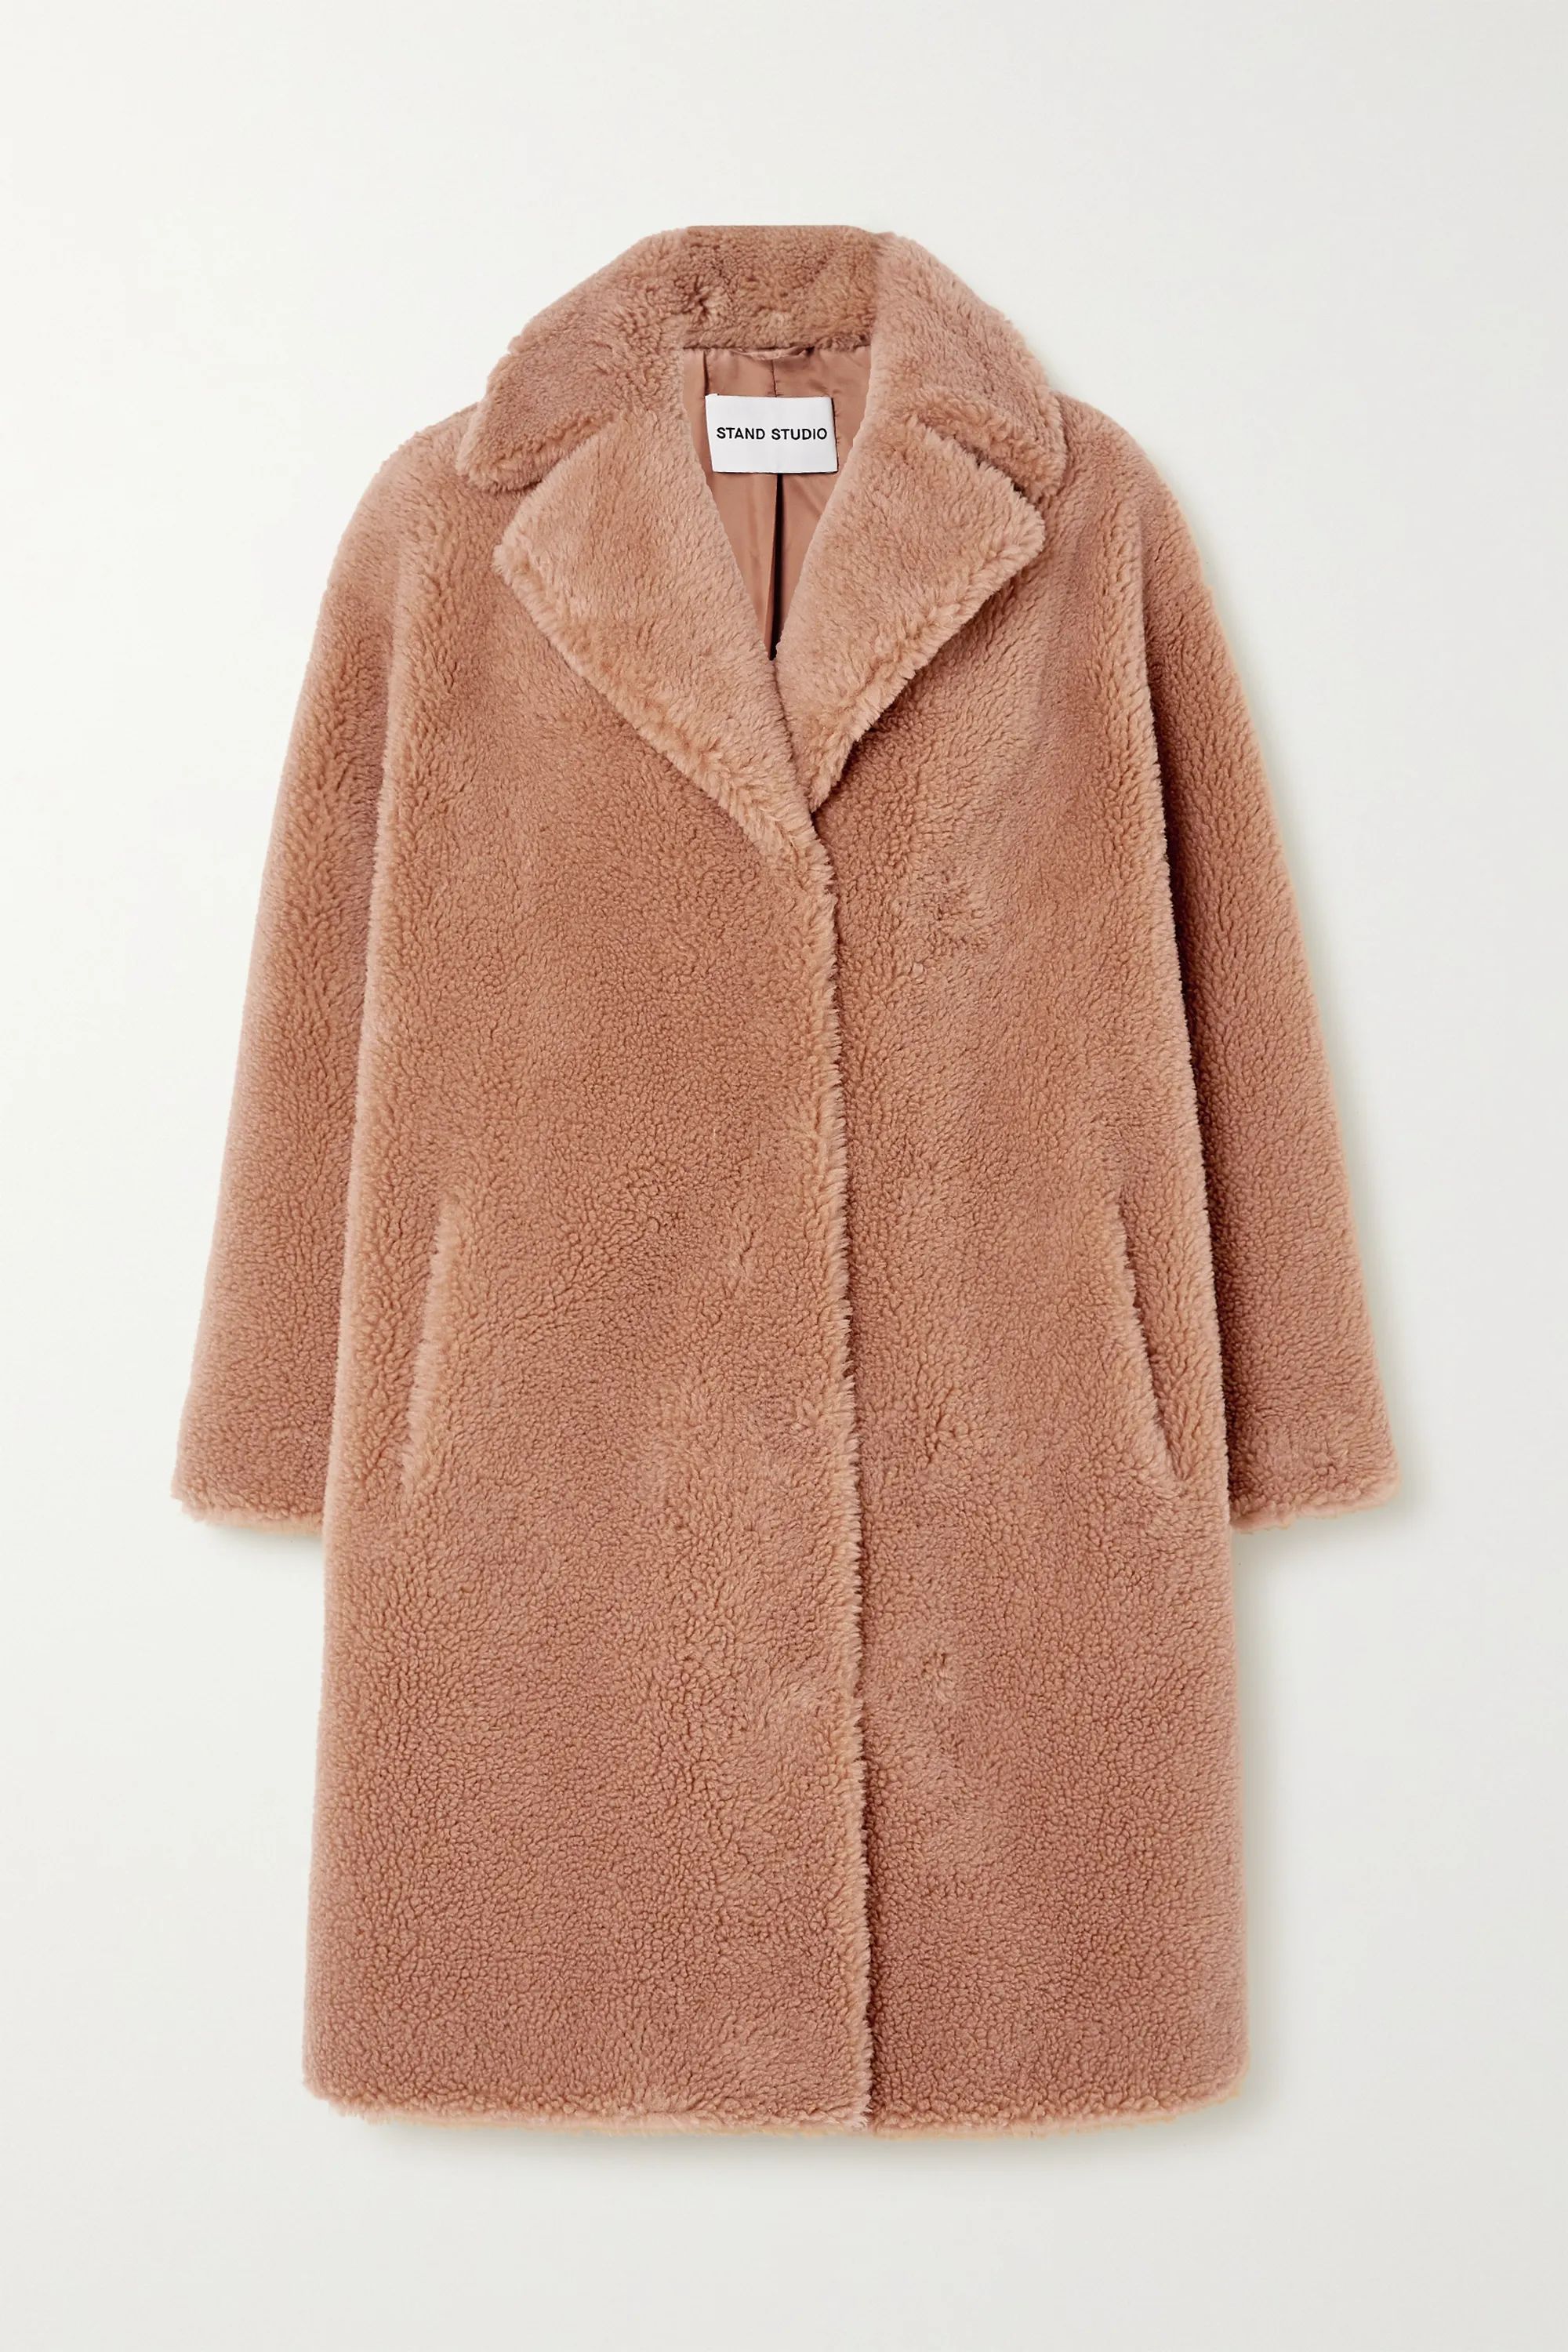 Beige Camille Cocoon faux shearling coat | Stand Studio | NET-A-PORTER | NET-A-PORTER (US)